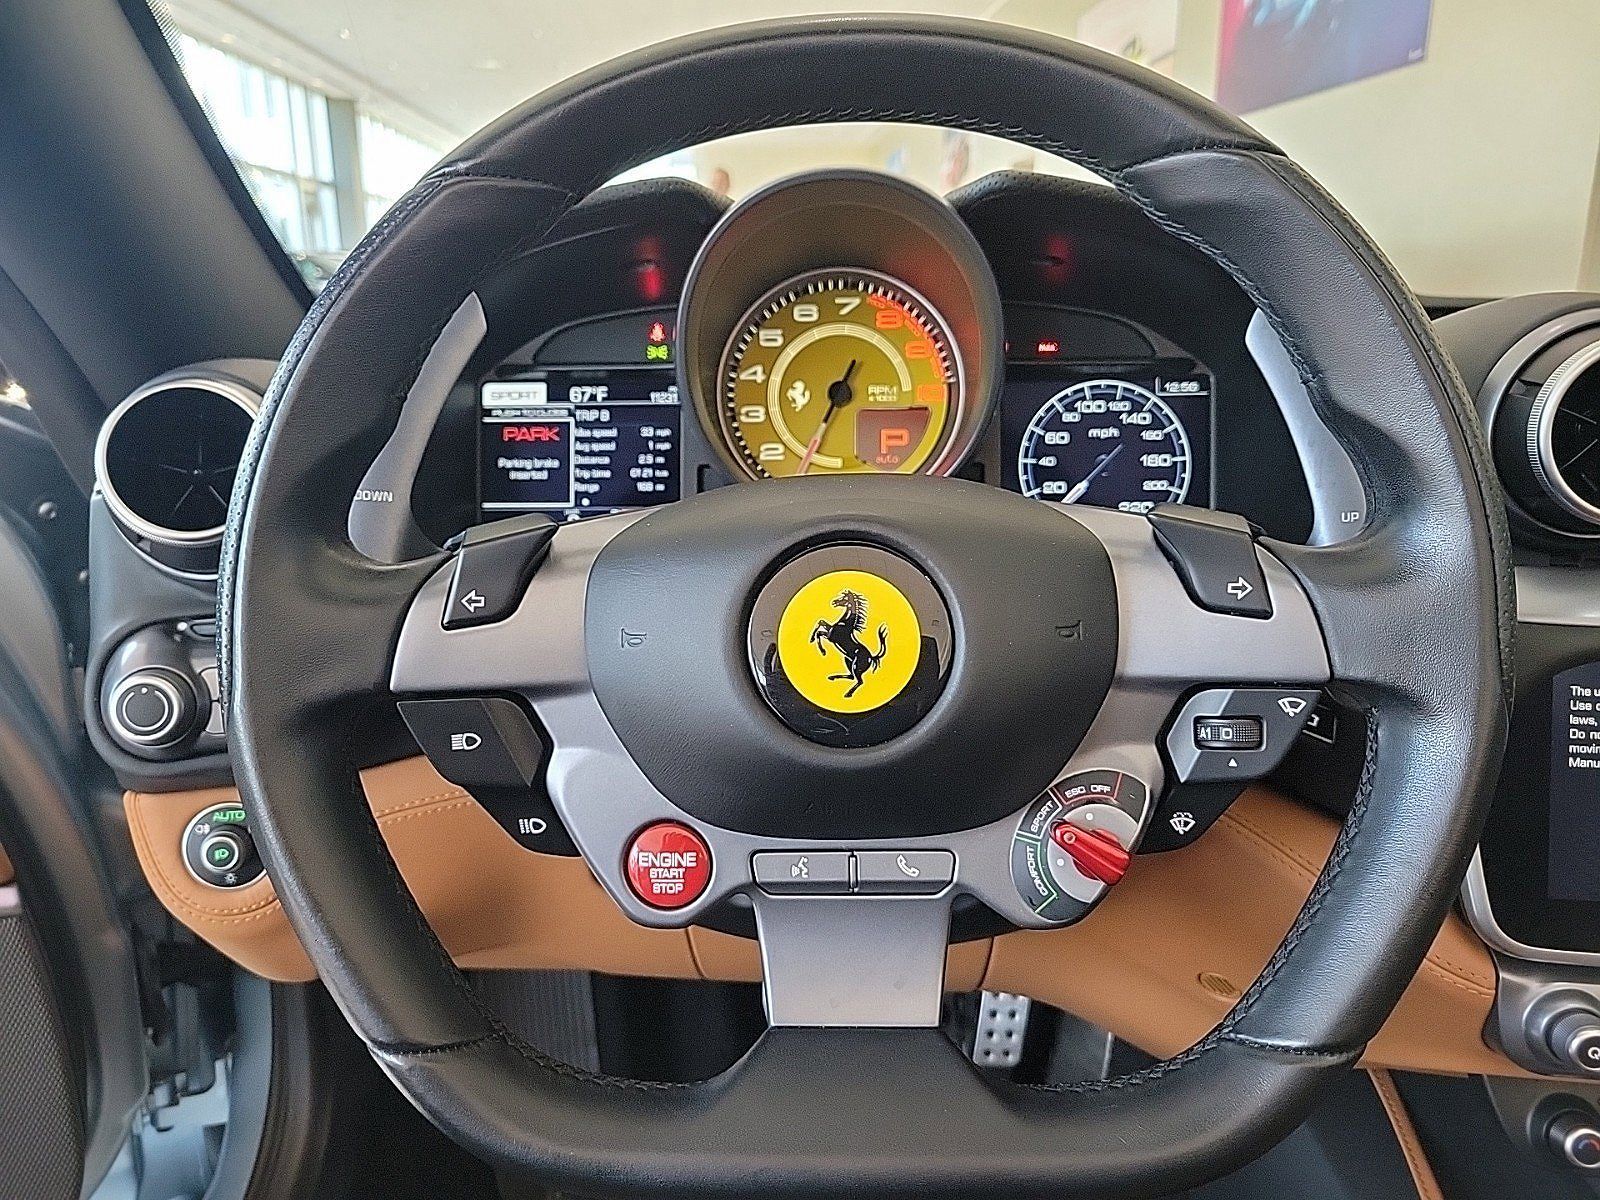 2019 Ferrari Portofino null image 11